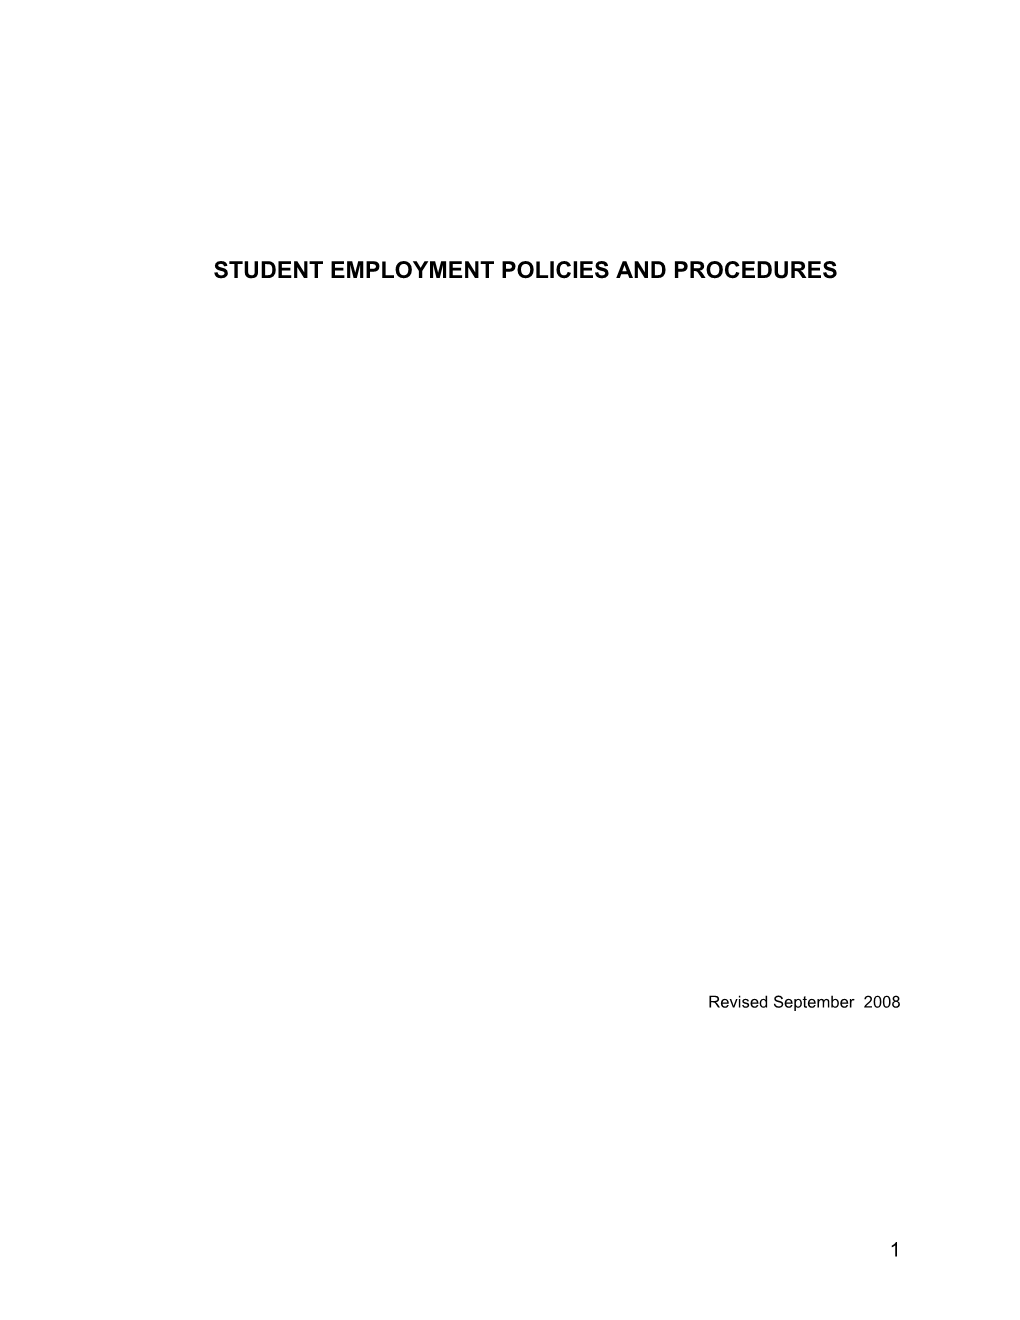 Student Employment Policies and Procedures